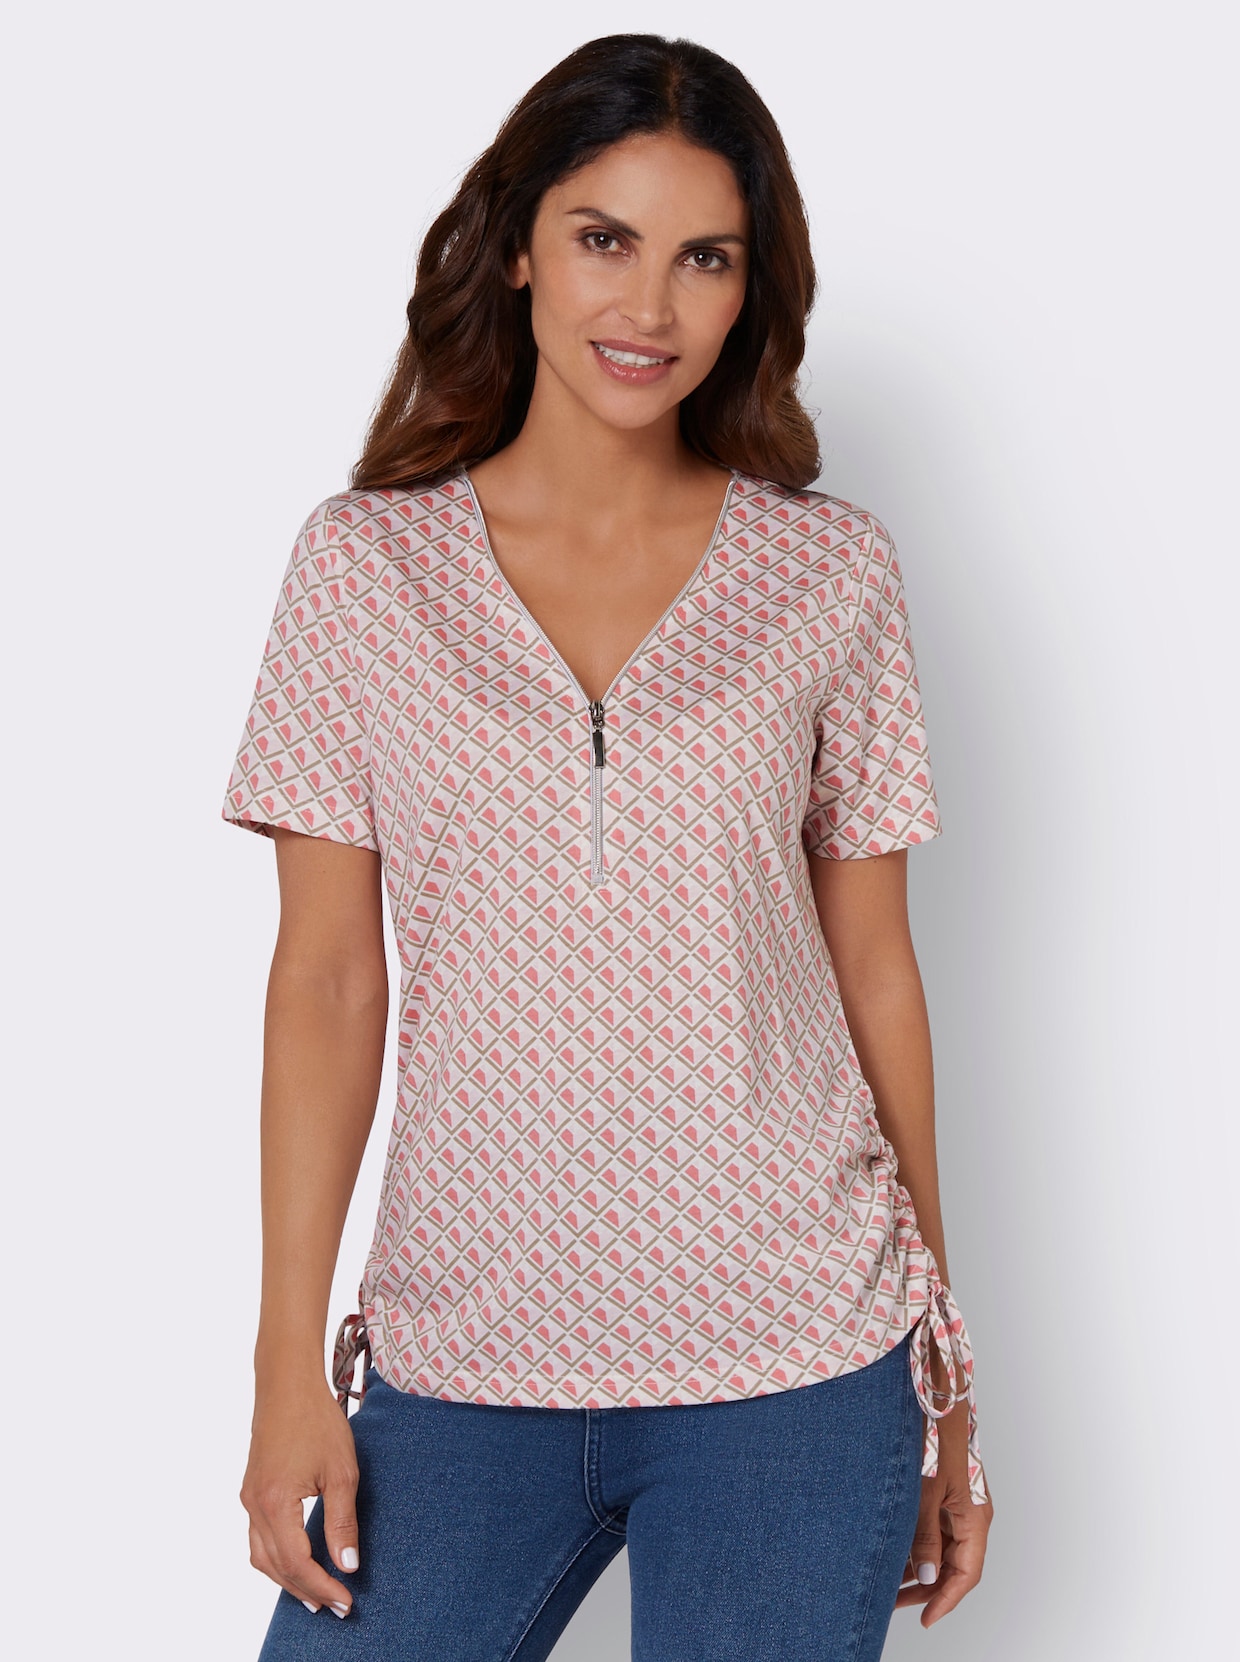 Bedrukt shirt - flamingo/lichtroze bedrukt